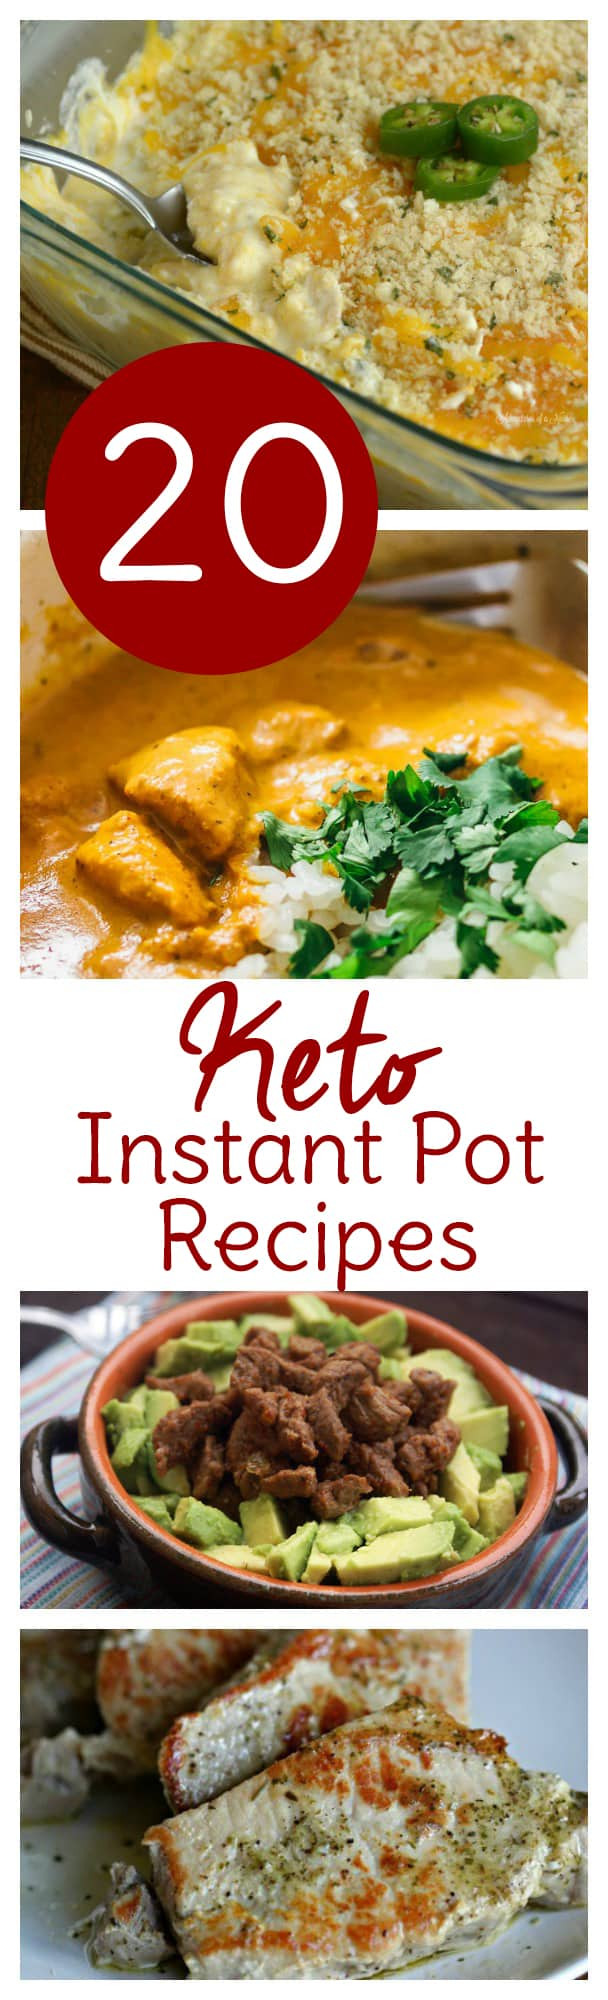 Instant Pot Low Fat Recipes
 20 Instant Pot Keto Recipes to Make This Week